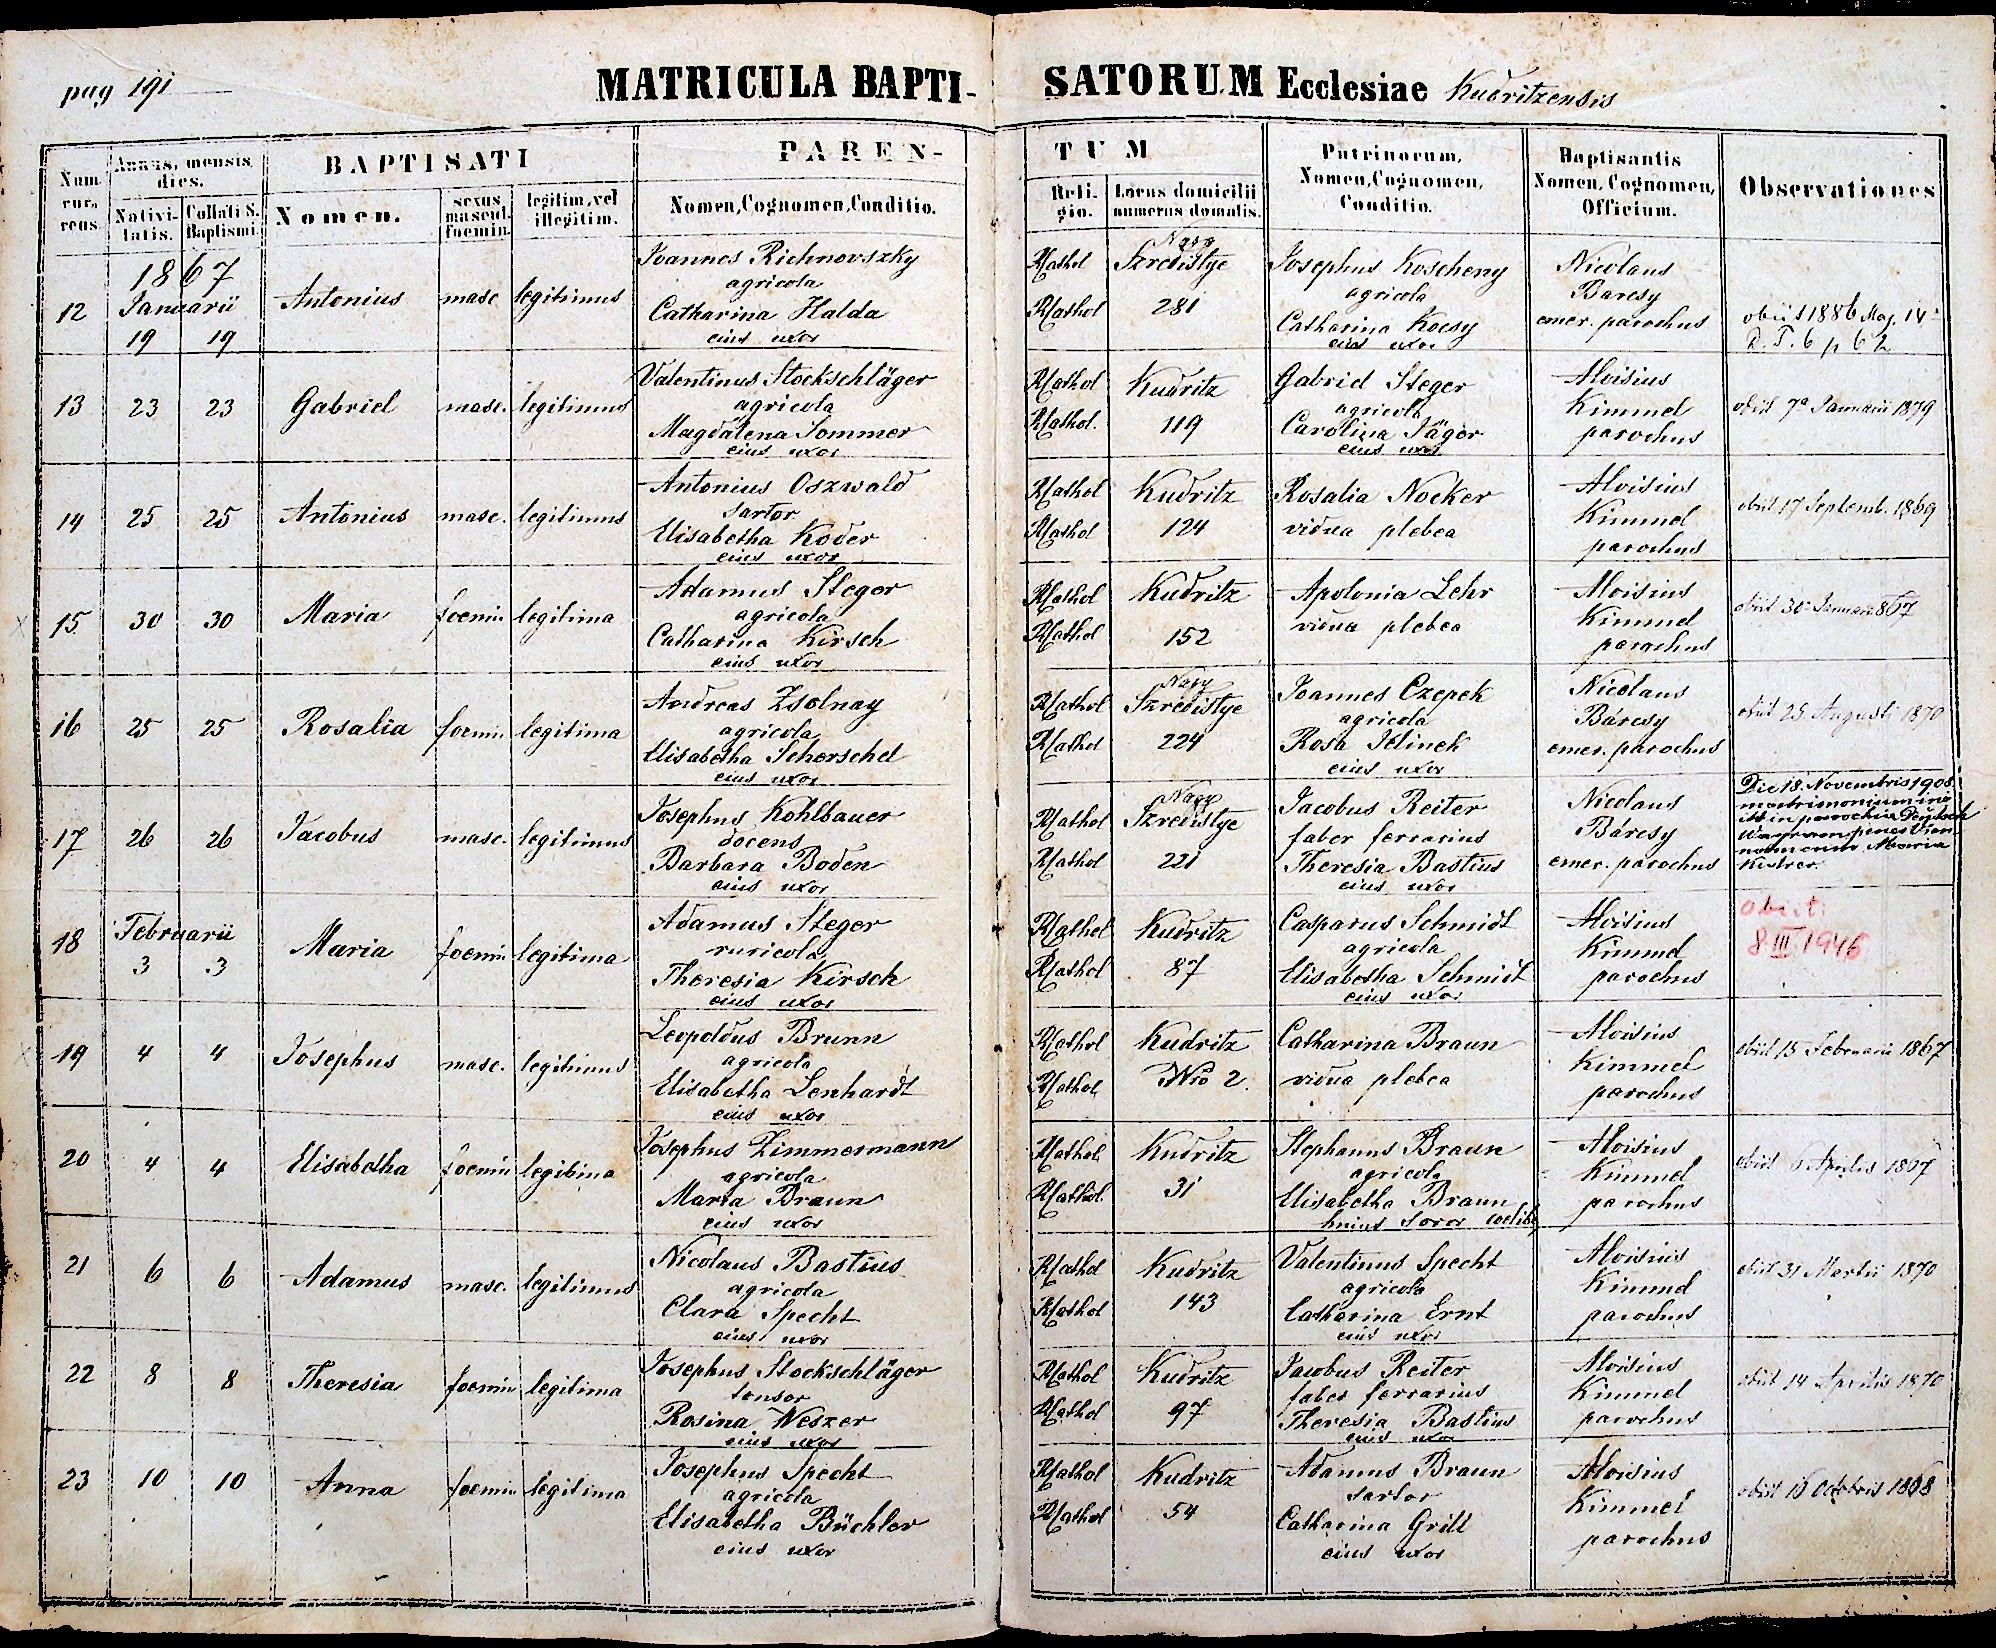 images/church_records/BIRTHS/1852-1870B/191